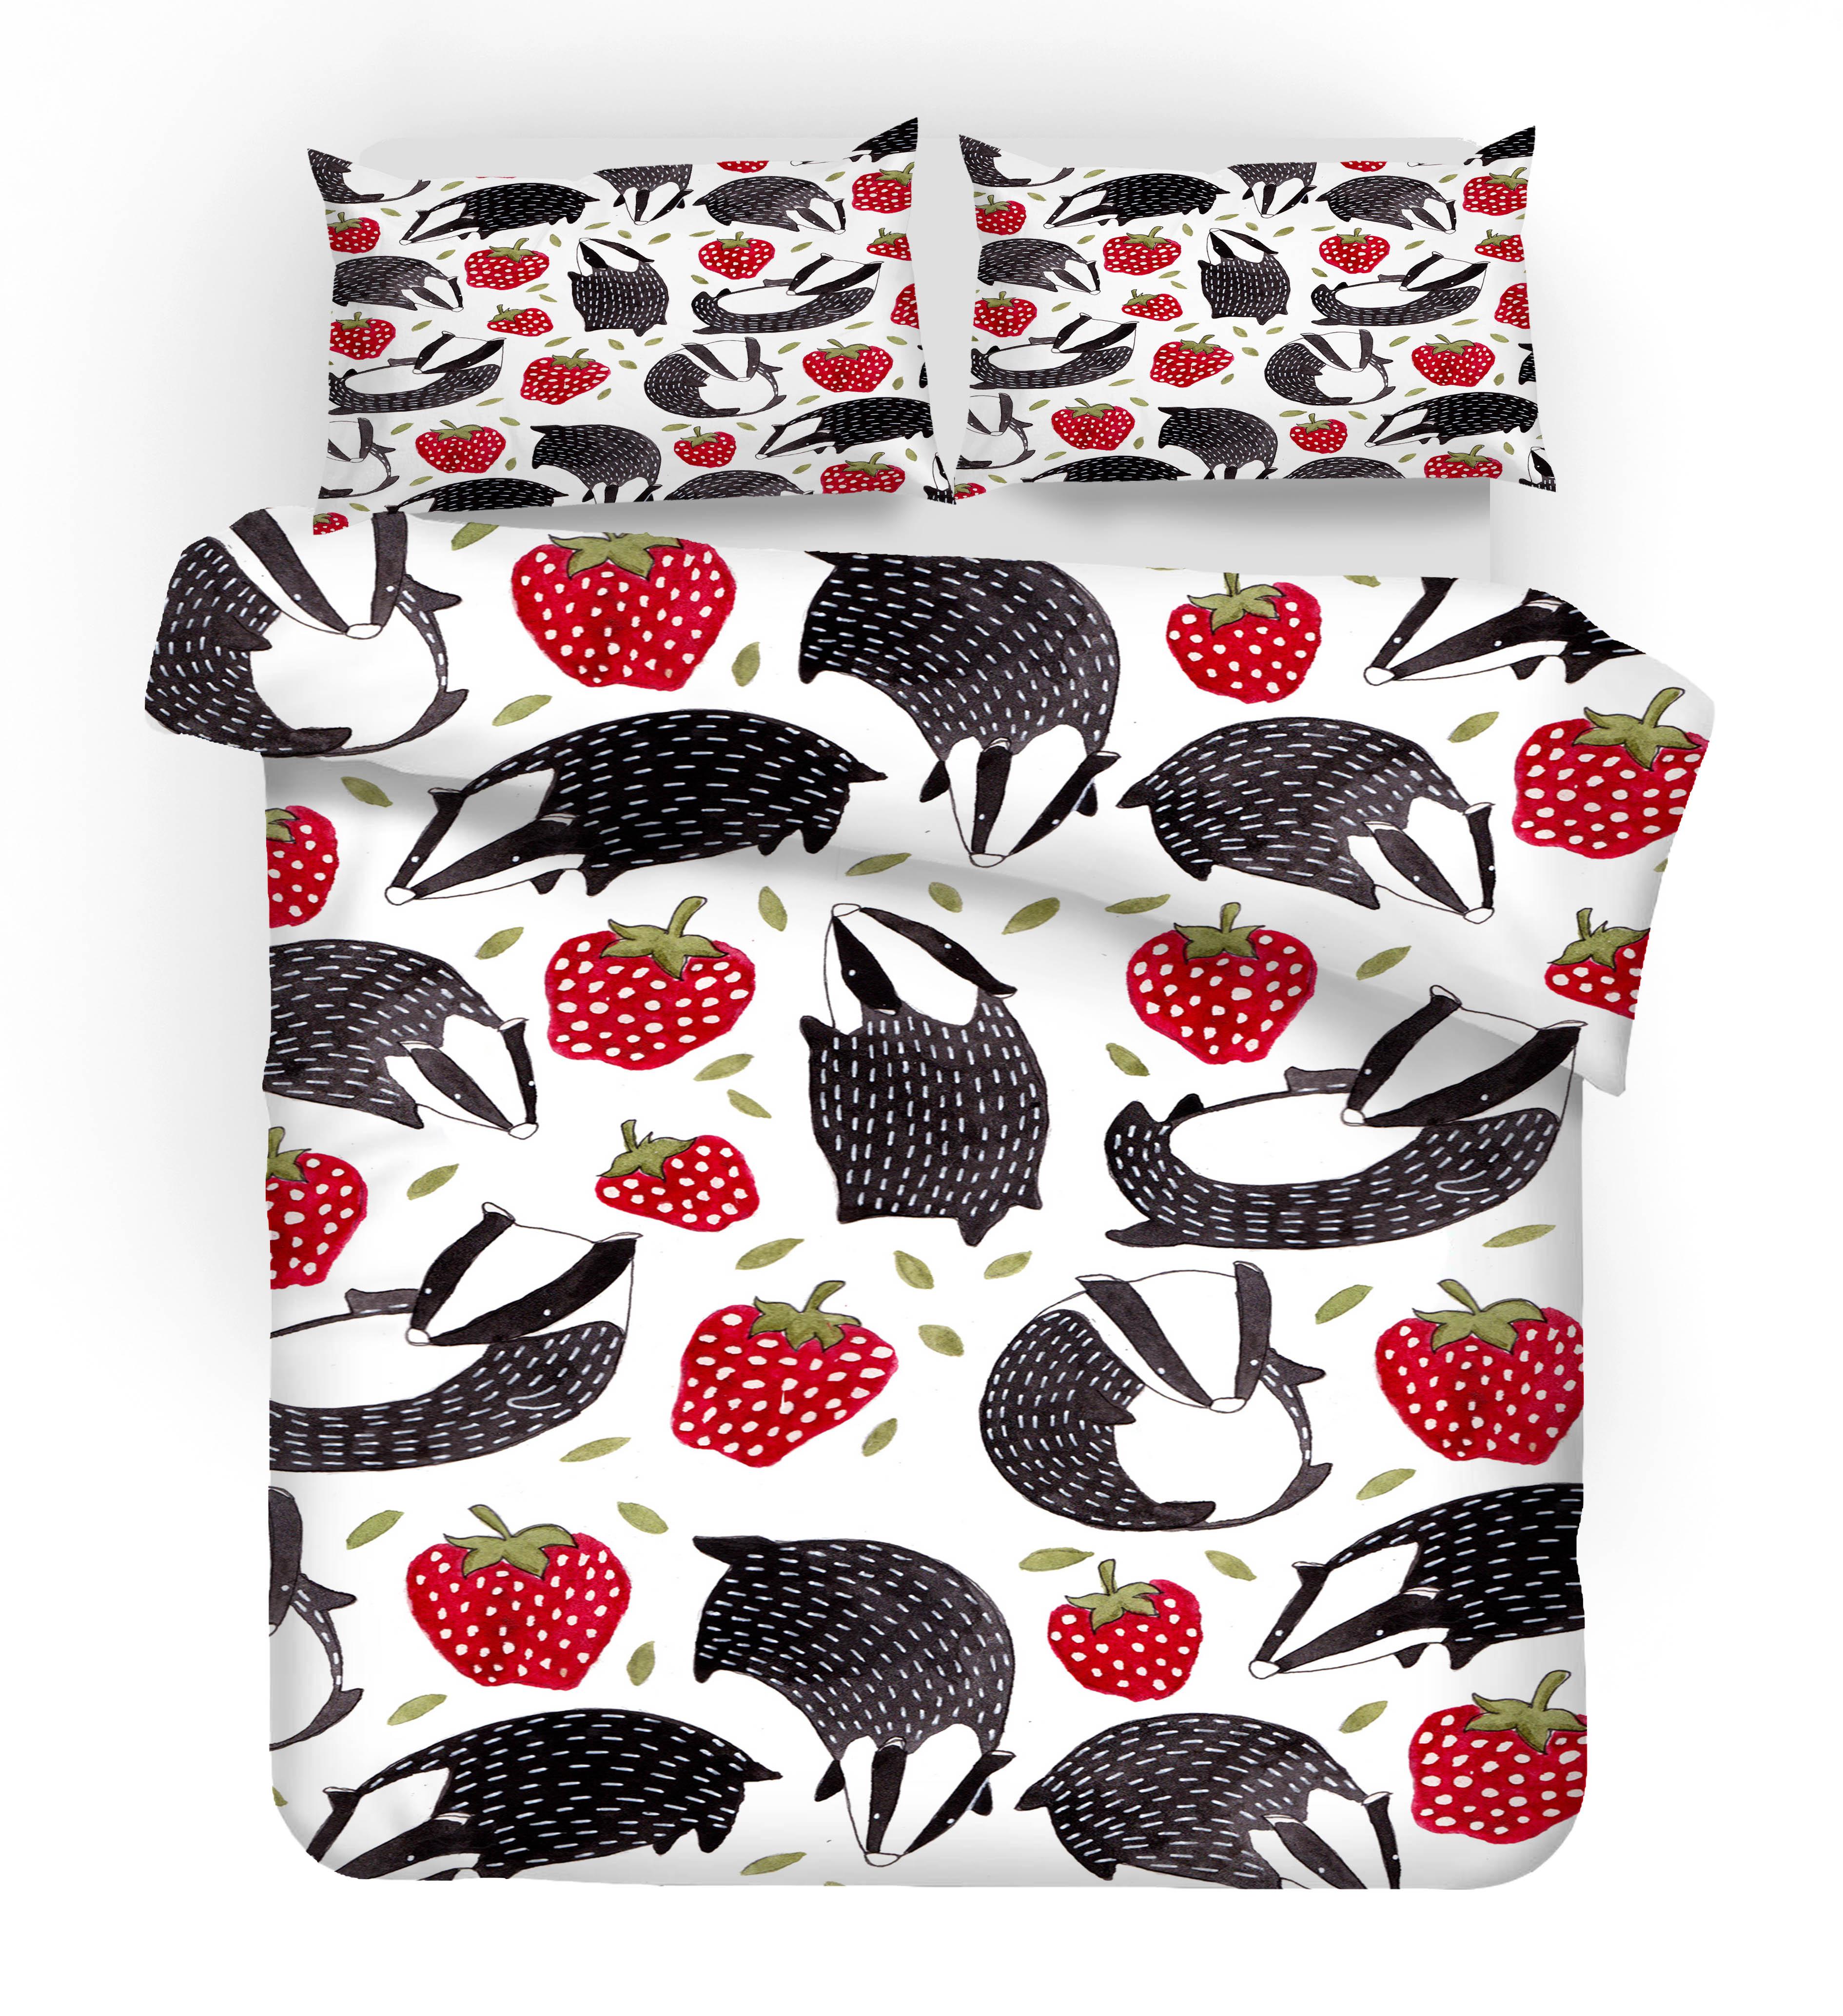 3D Strawberry Animals Quilt Cover Set Bedding Set Pillowcases 221- Jess Art Decoration